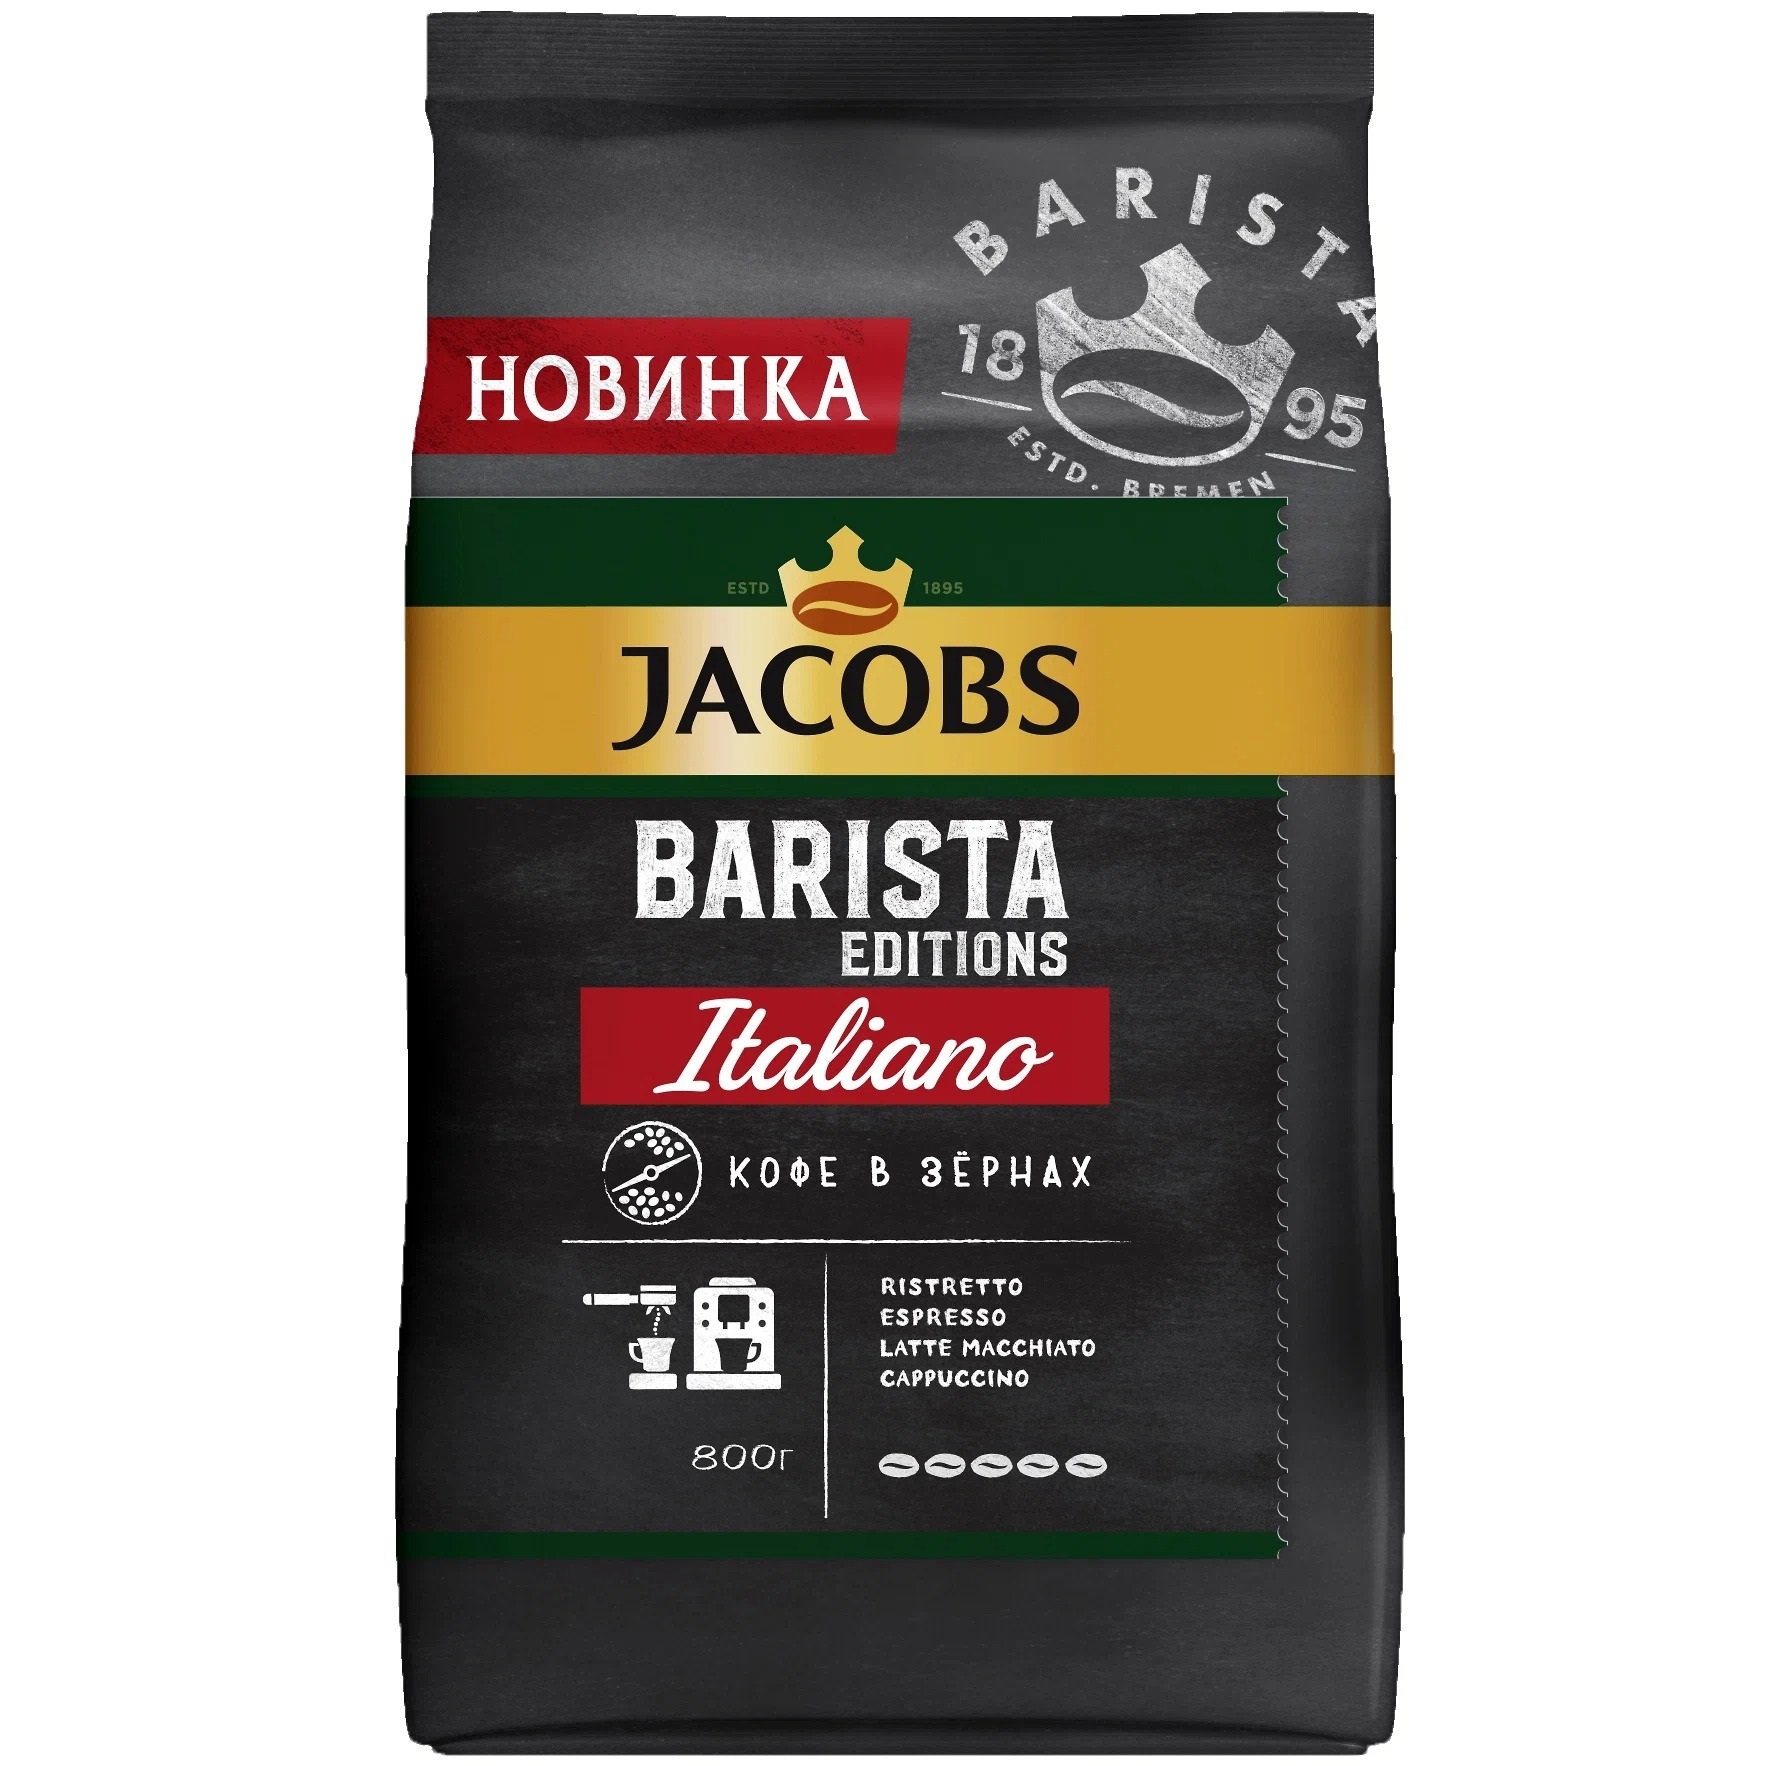 Кофе молотый Jacobs Barista Edition Italiano 800 г кофе молотый жареный jacobs barista editions italiano 230 г